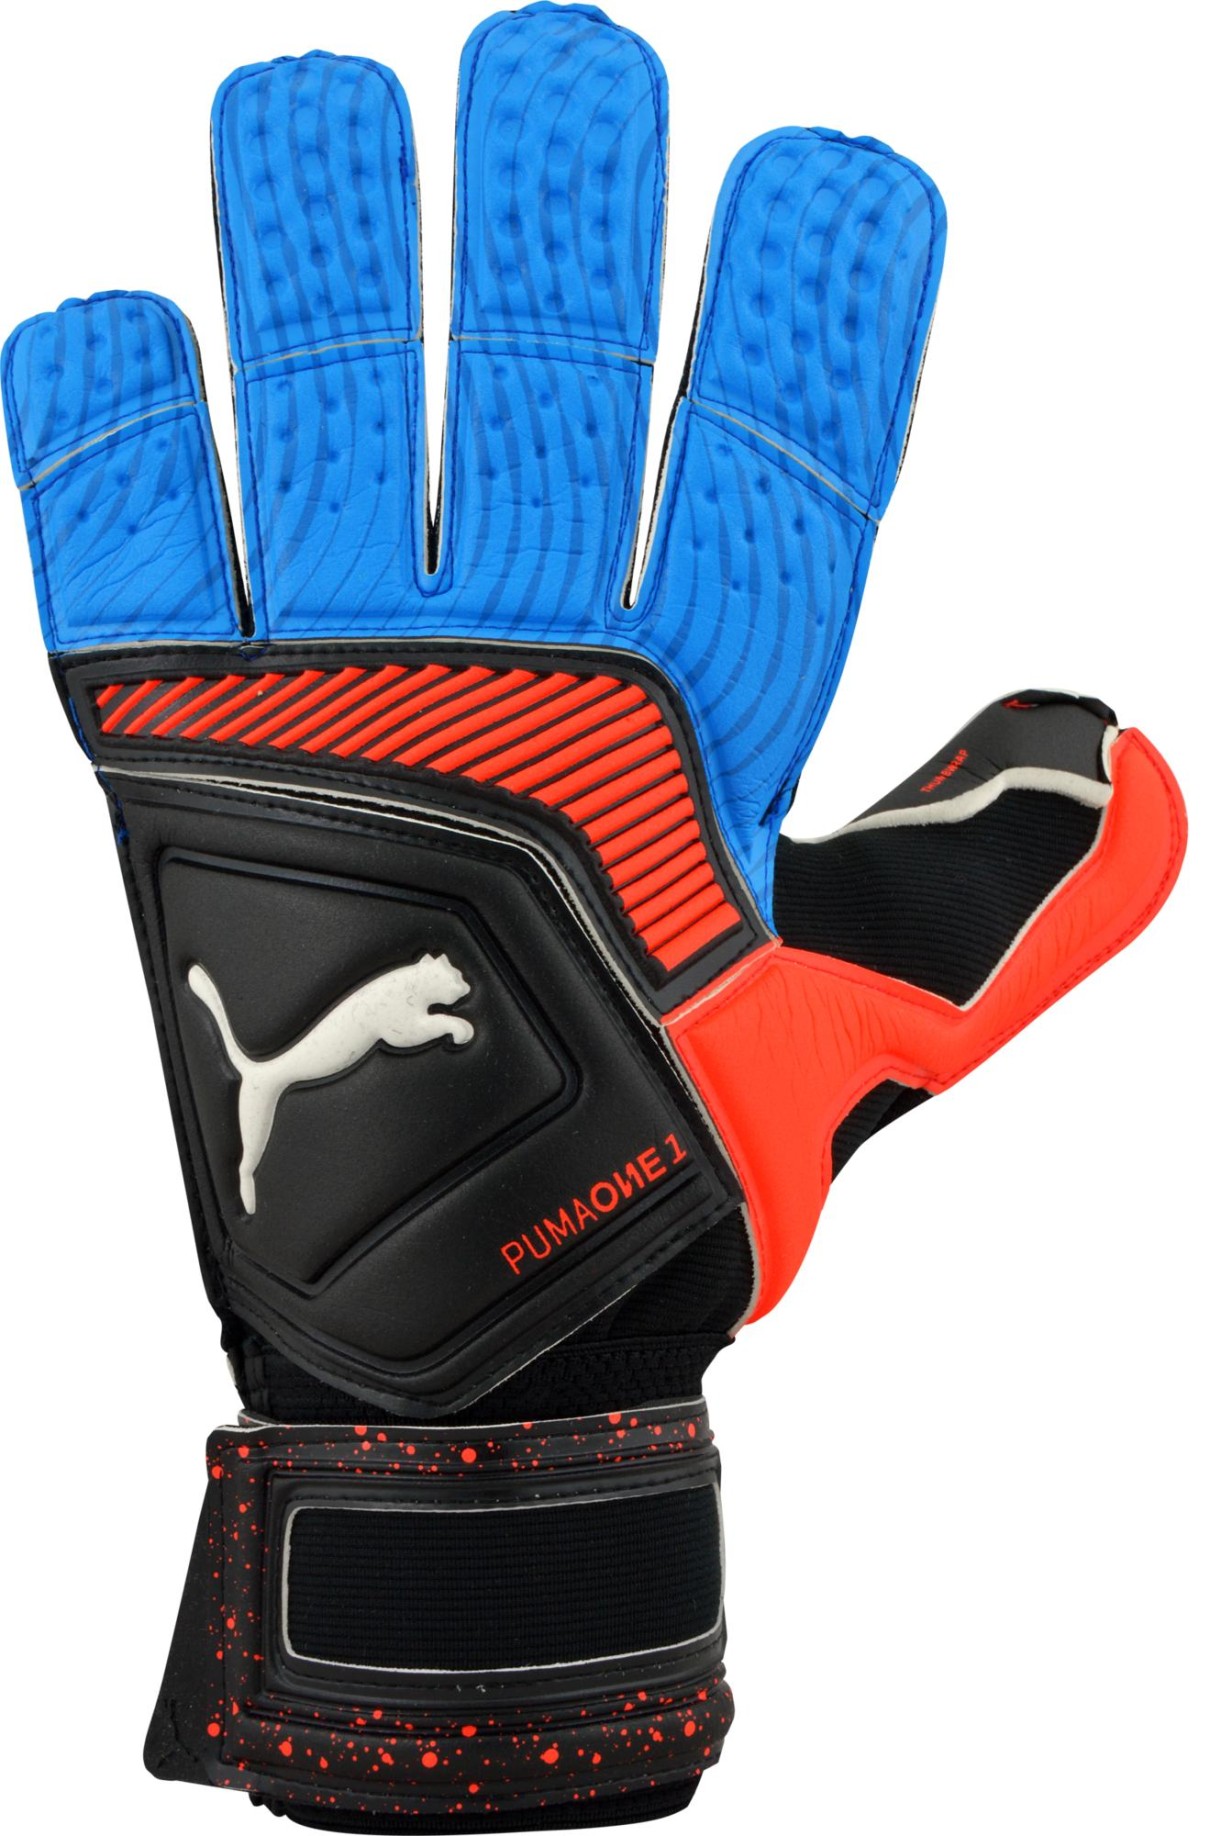 puma goalkeeper gloves pink and blue